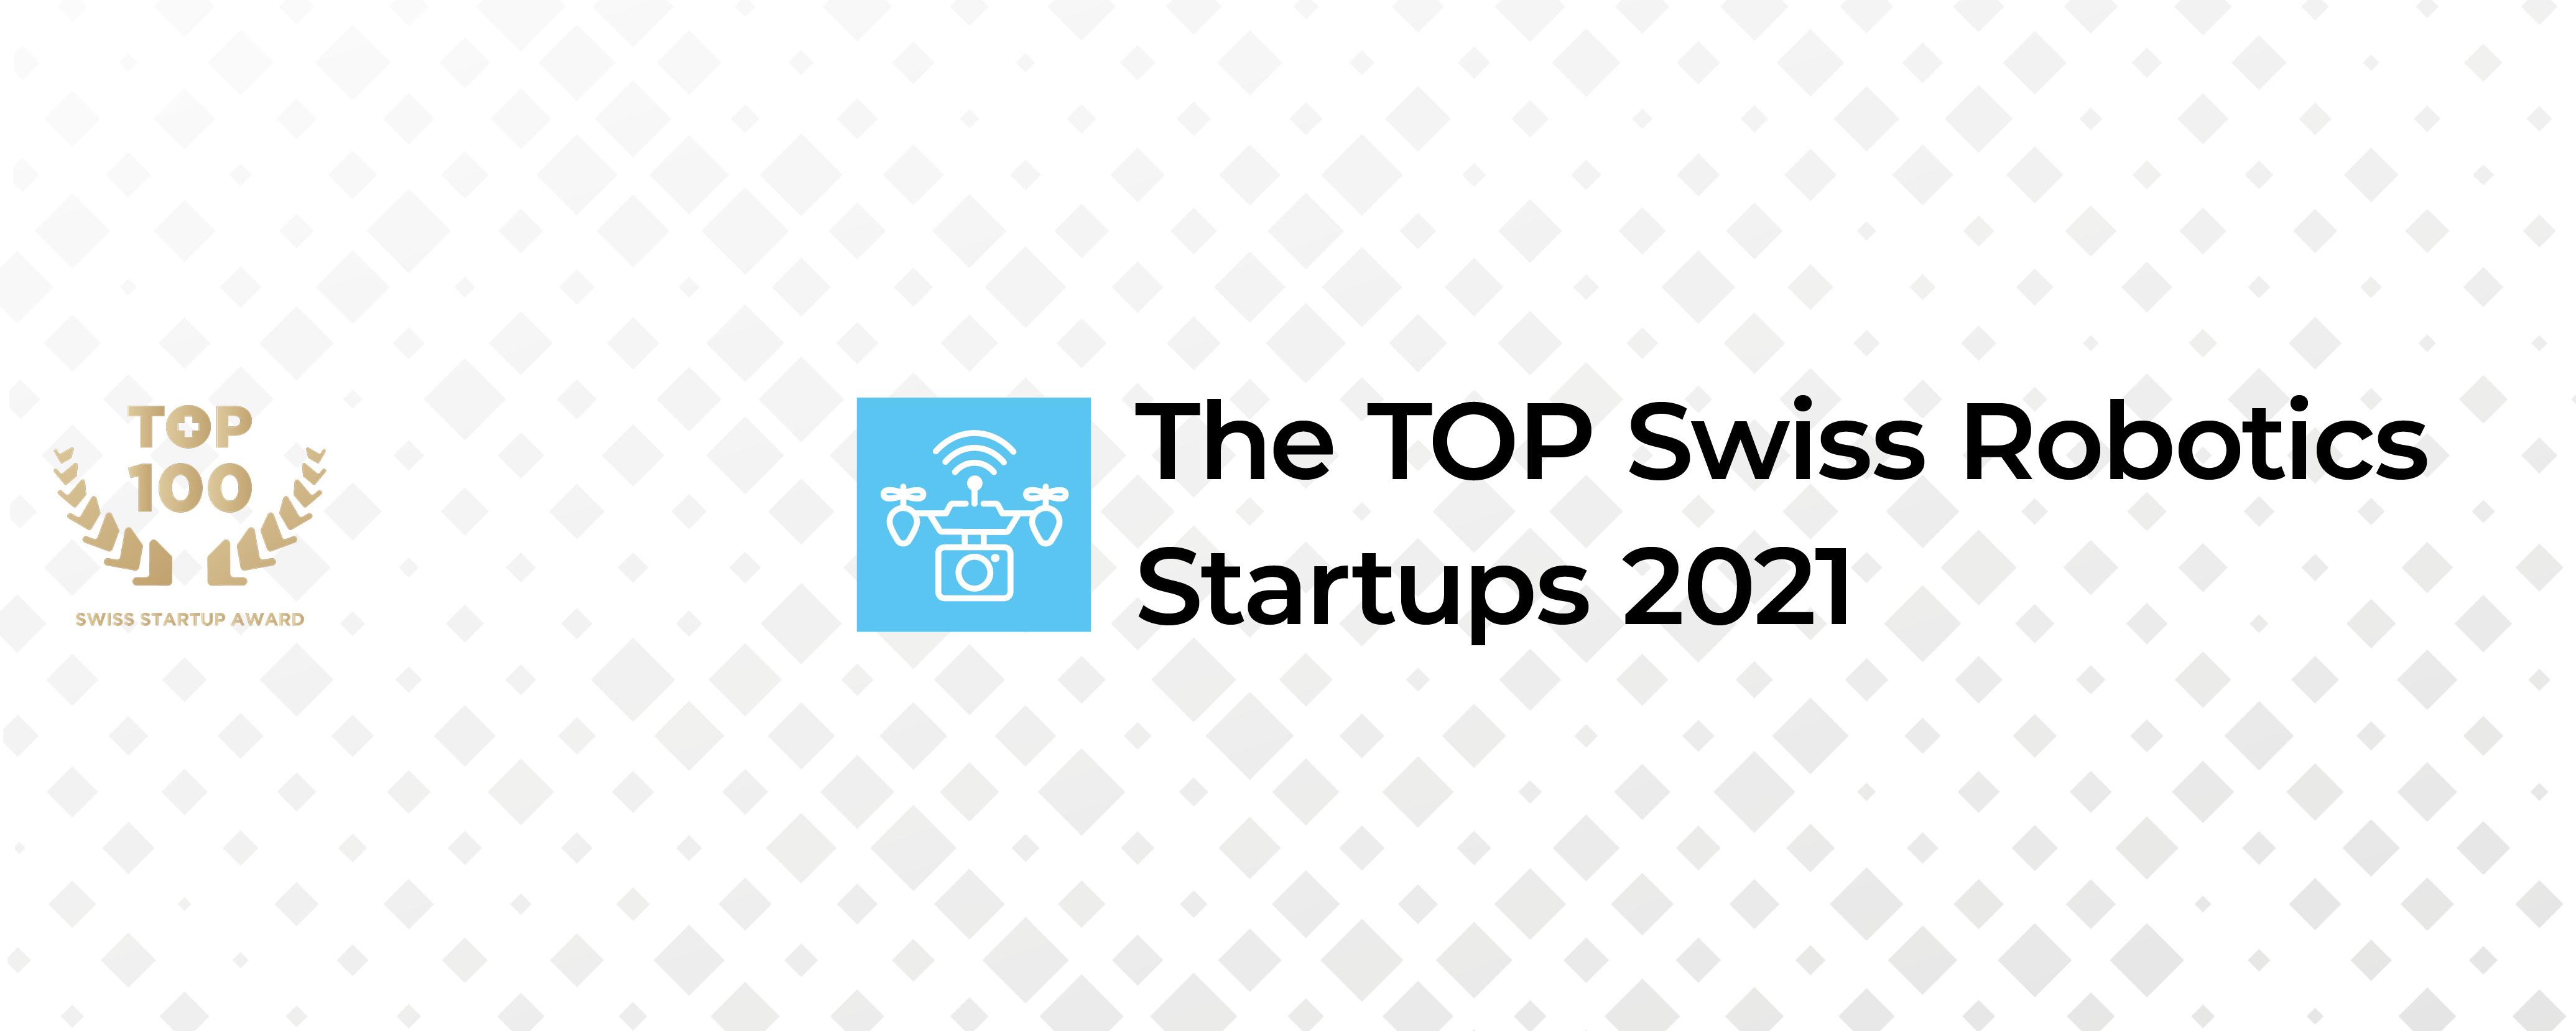 TOP 100 Swiss Startup Award - 100 most promising Swiss